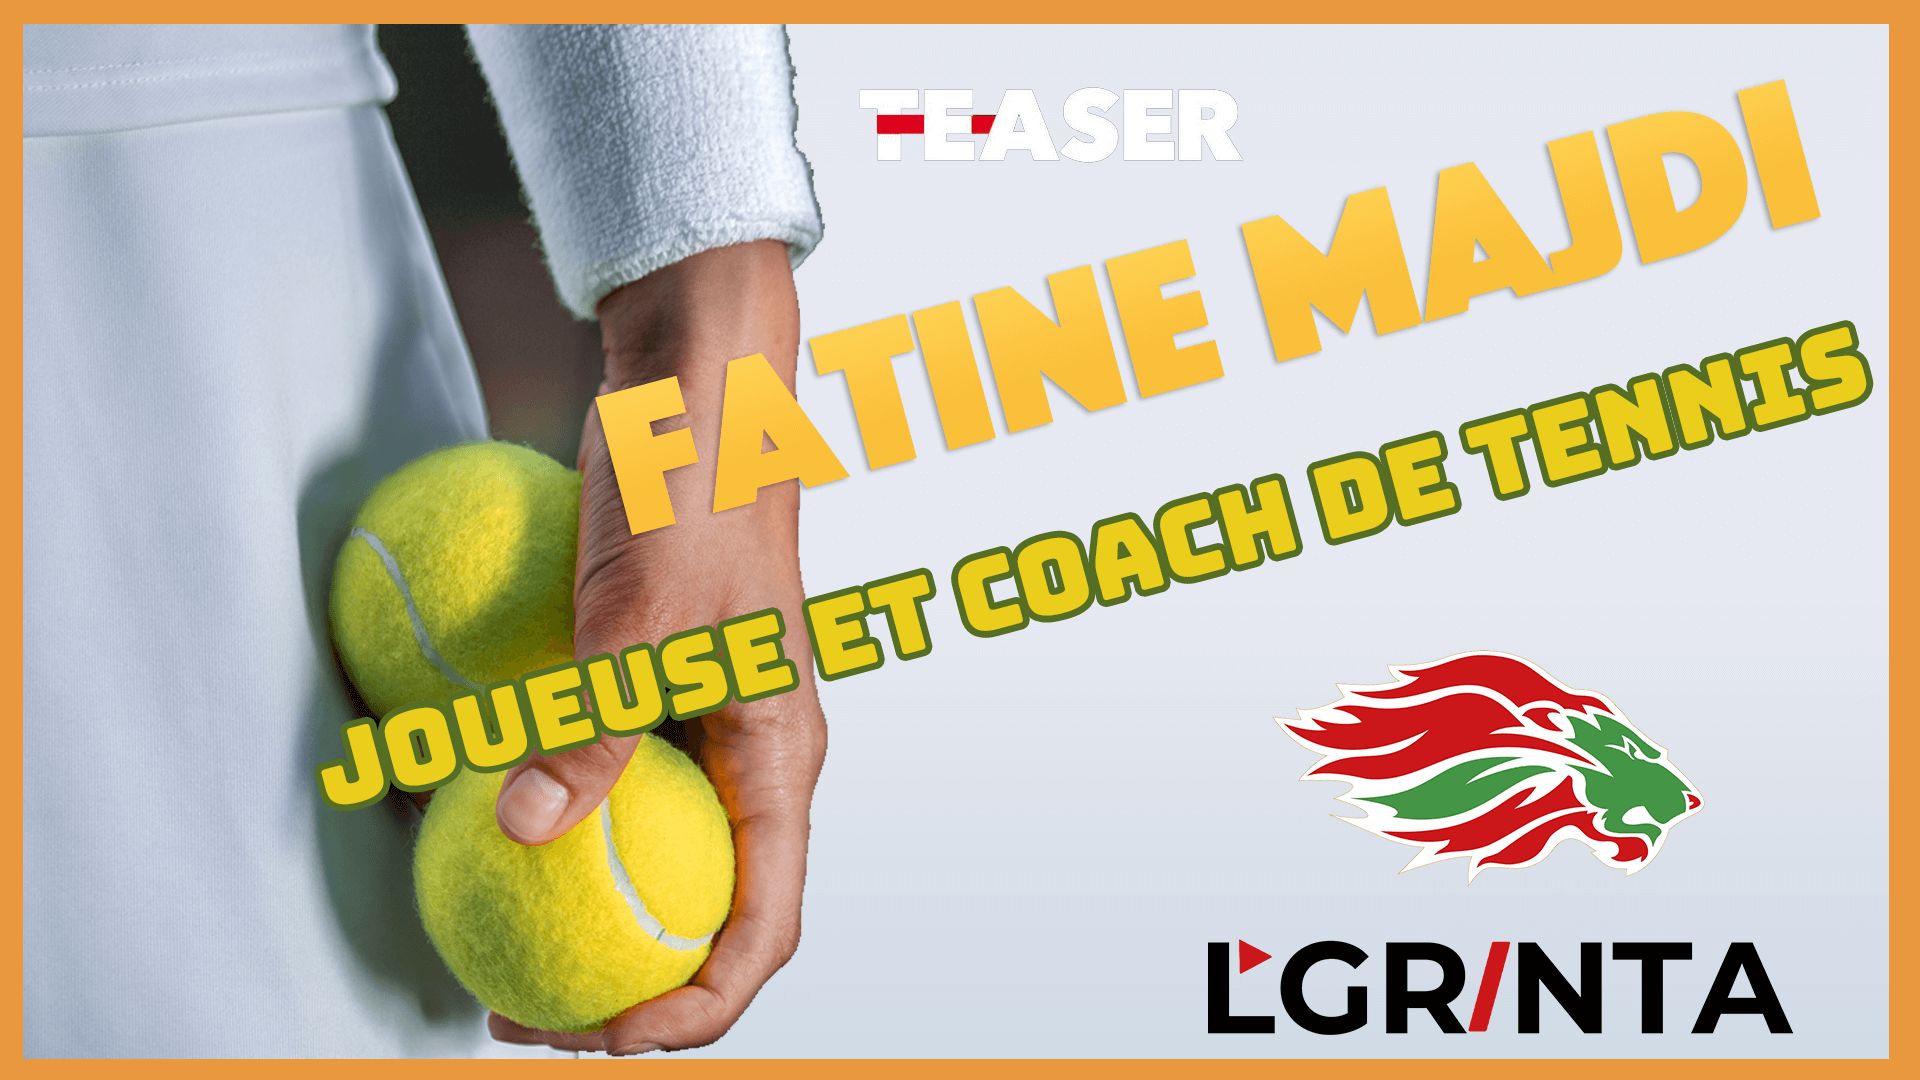 Teaser : L'Grinta reçoit Fatine Majdi, Tenniswoman et coach